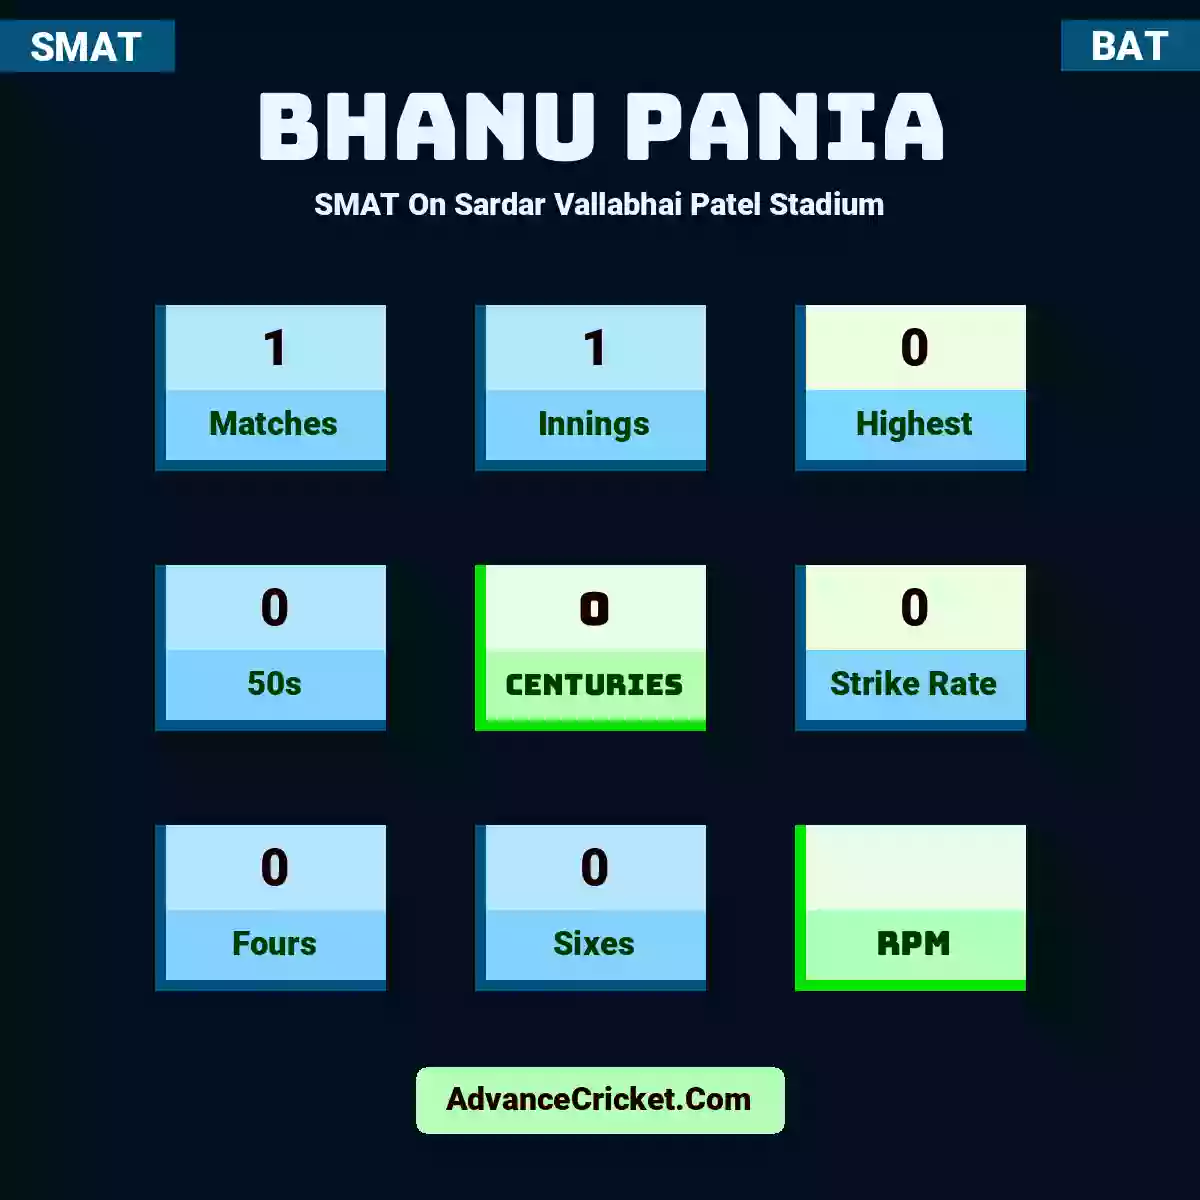 Bhanu Pania SMAT  On Sardar Vallabhai Patel Stadium, Bhanu Pania played 1 matches, scored 0 runs as highest, 0 half-centuries, and 0 centuries, with a strike rate of 0. B.Pania hit 0 fours and 0 sixes.